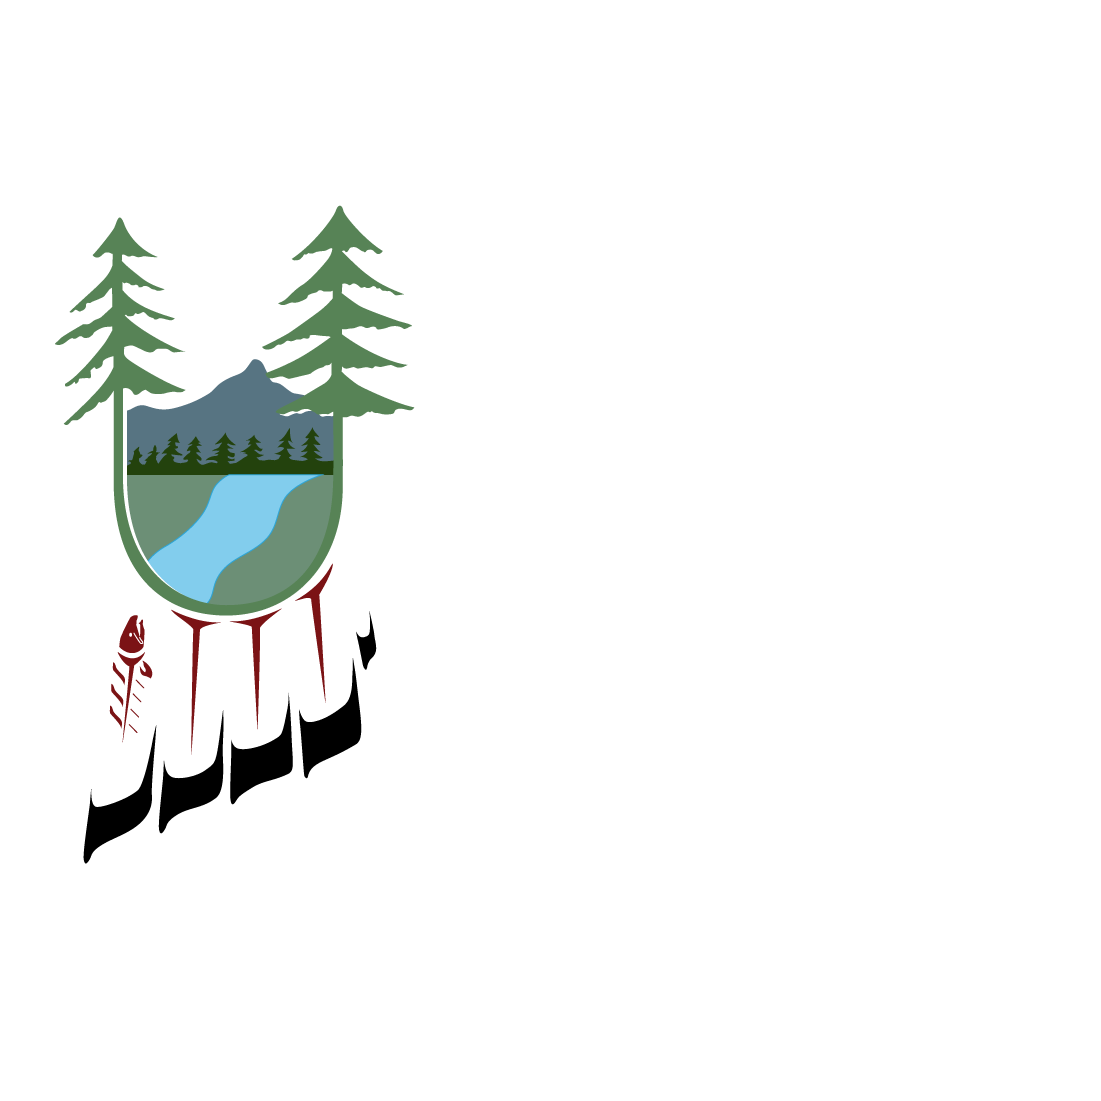 Tribal Habitat Conference